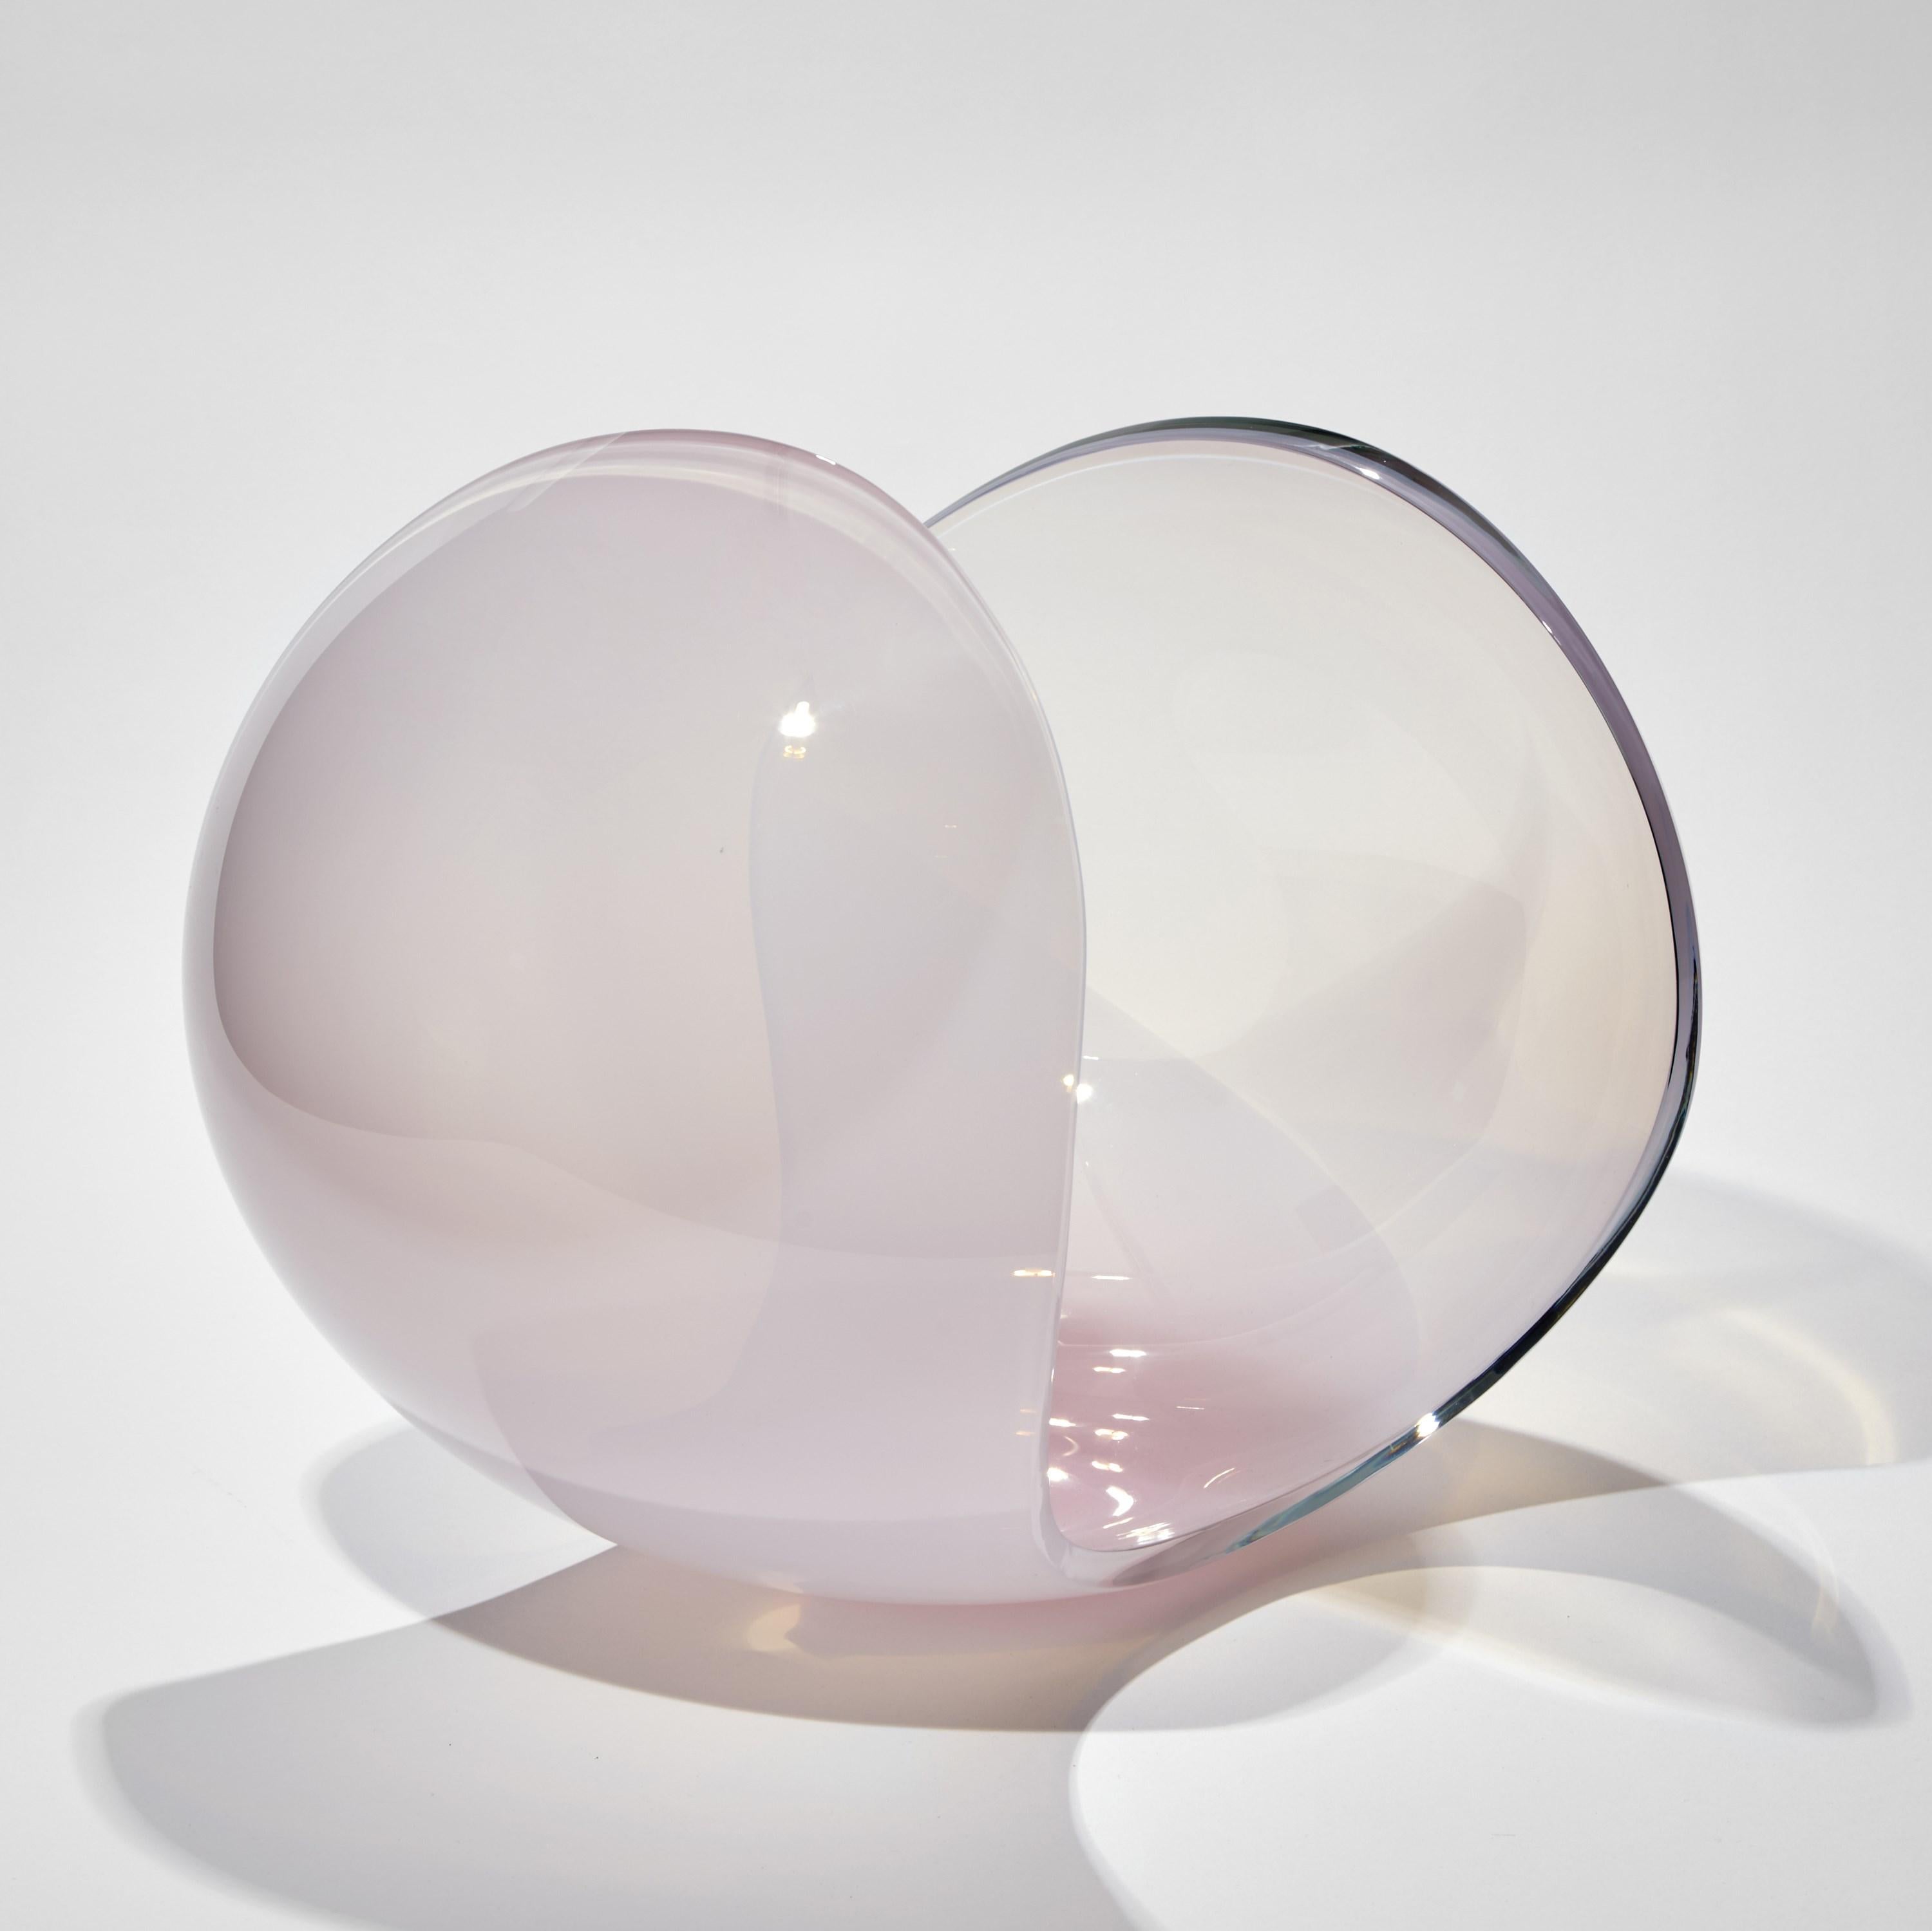 Organic Modern Planet in Soft Pink, a unique Glass Sculpture & Centrepiece by Lena Bergström For Sale